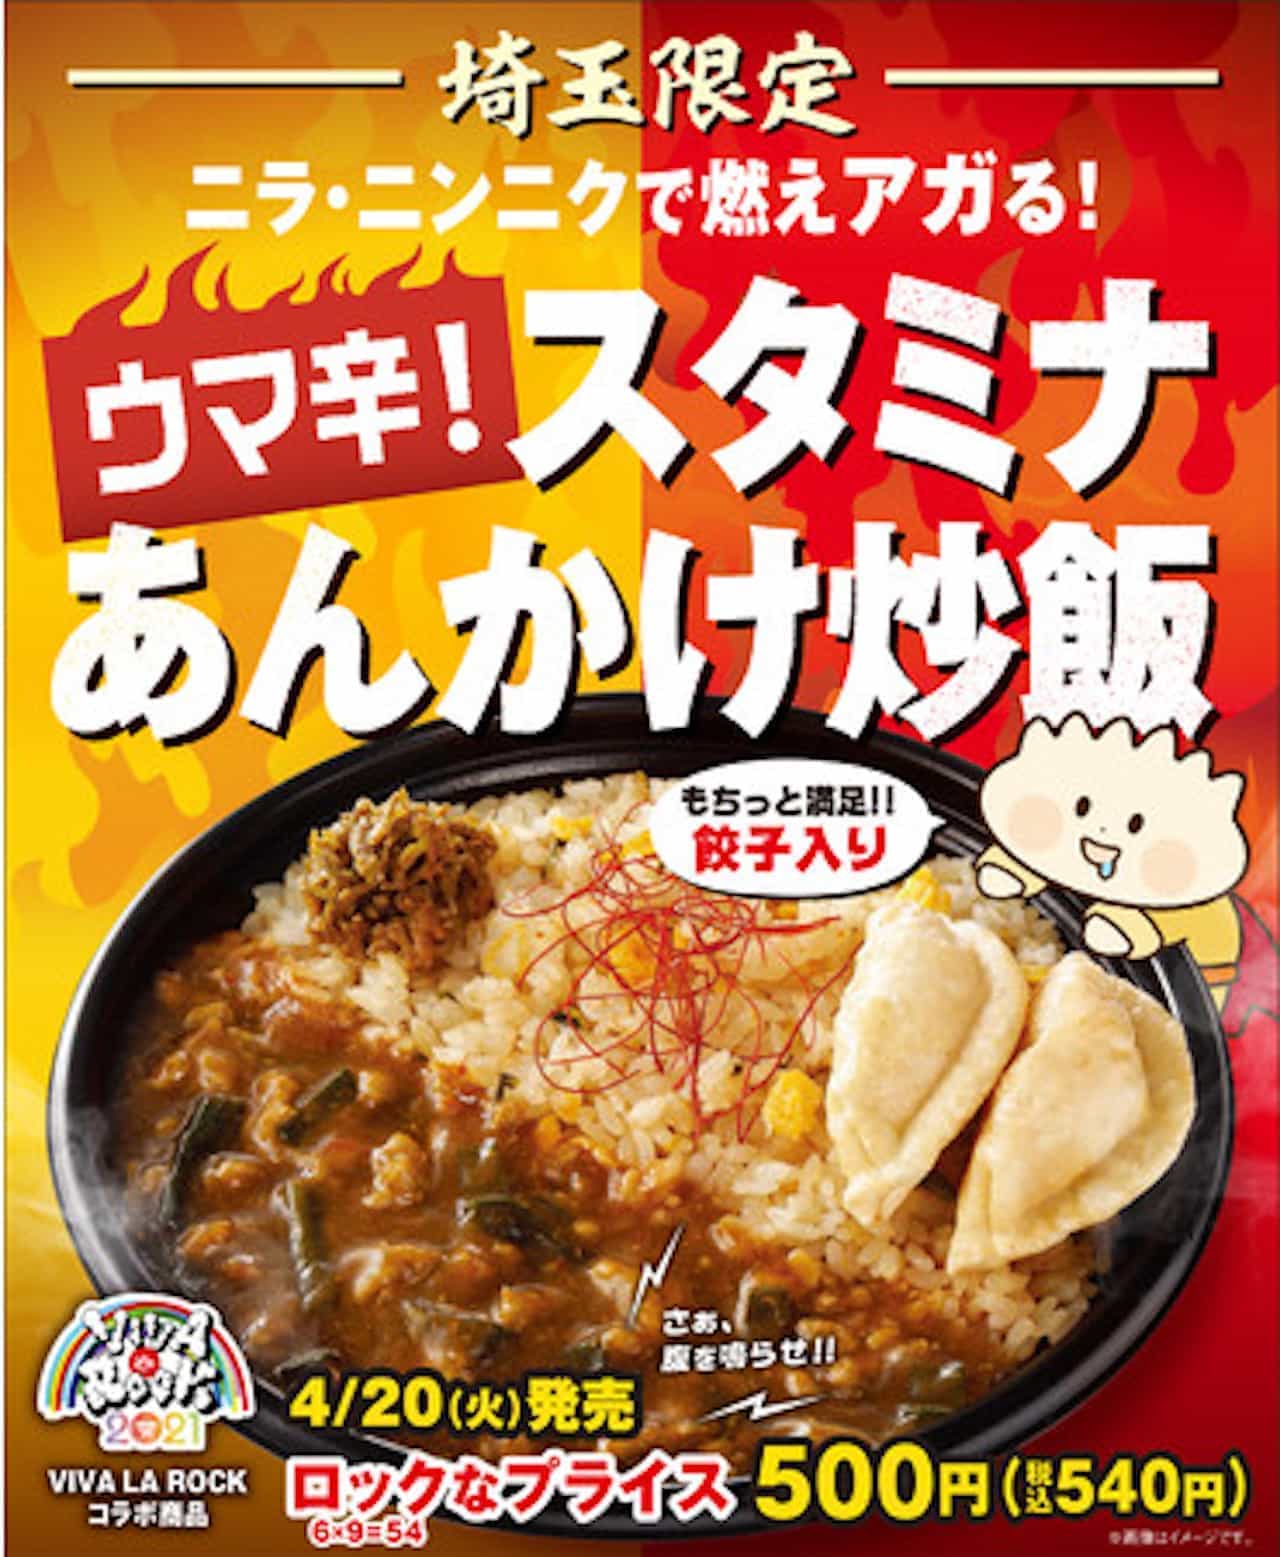 FamilyMart "Uma Spicy! Stamina Ankake Fried Rice" Saitama Prefecture Limited